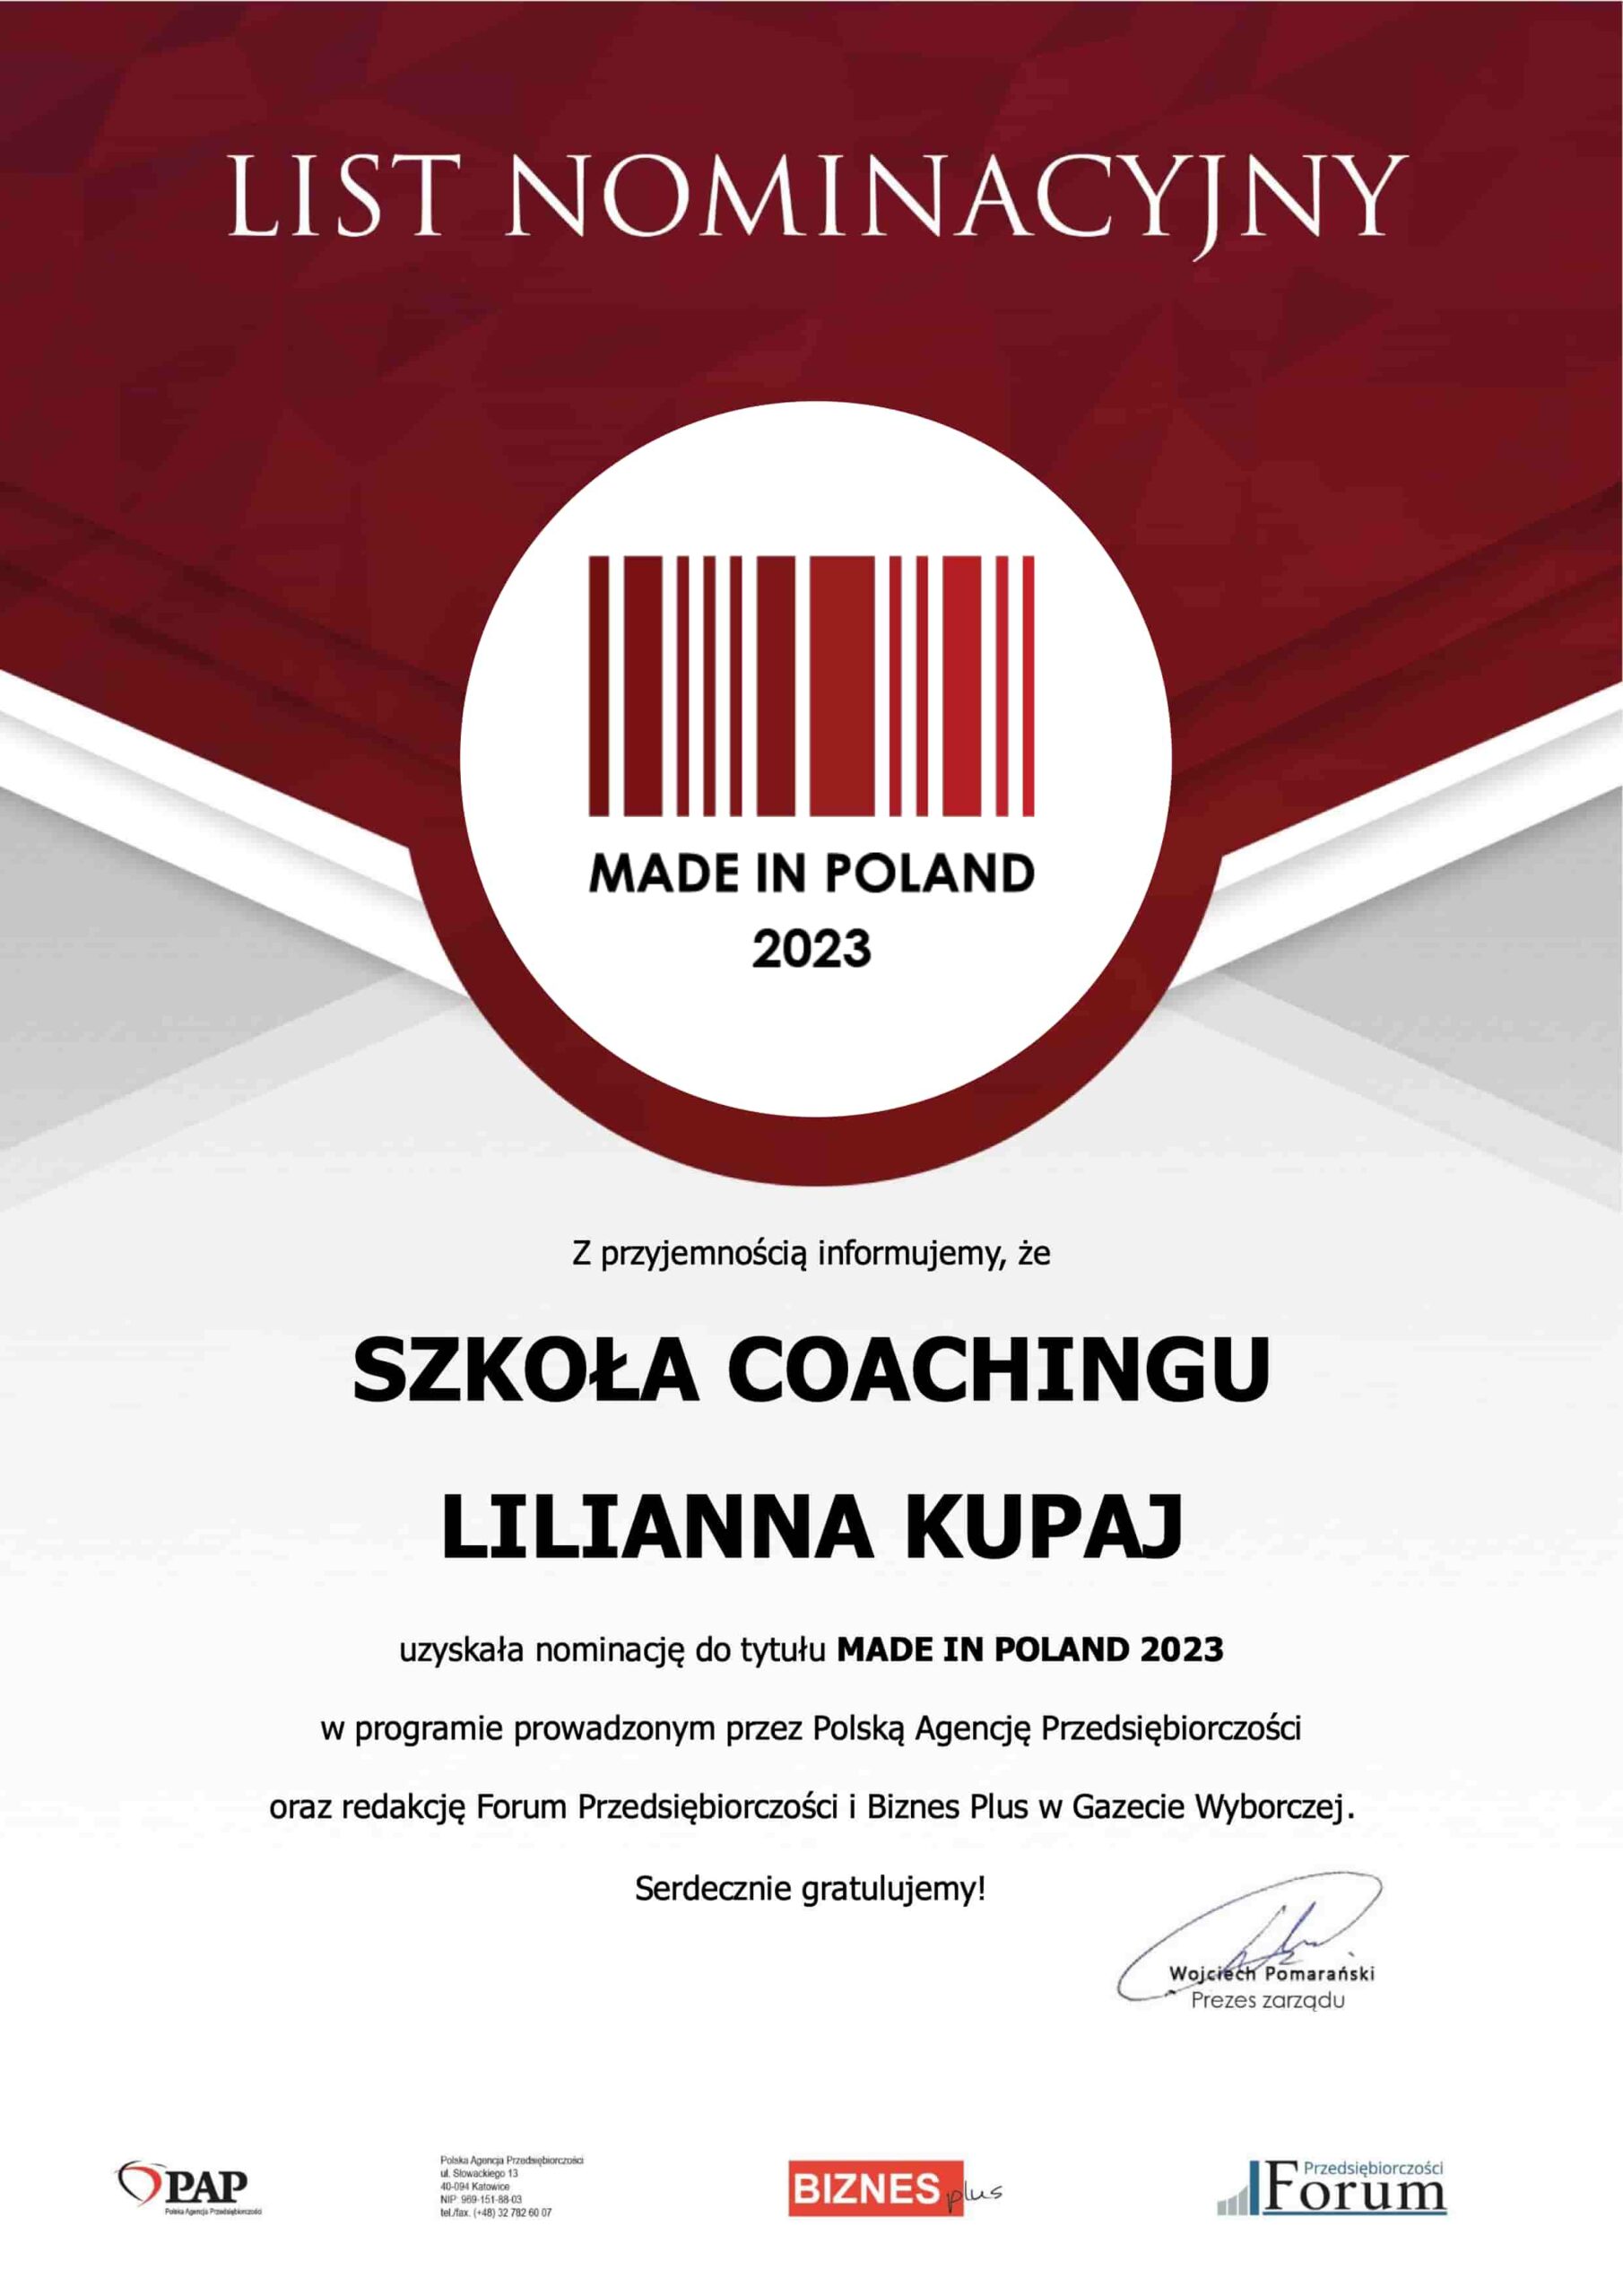 Lilianna Kupaj made in Poland 2023